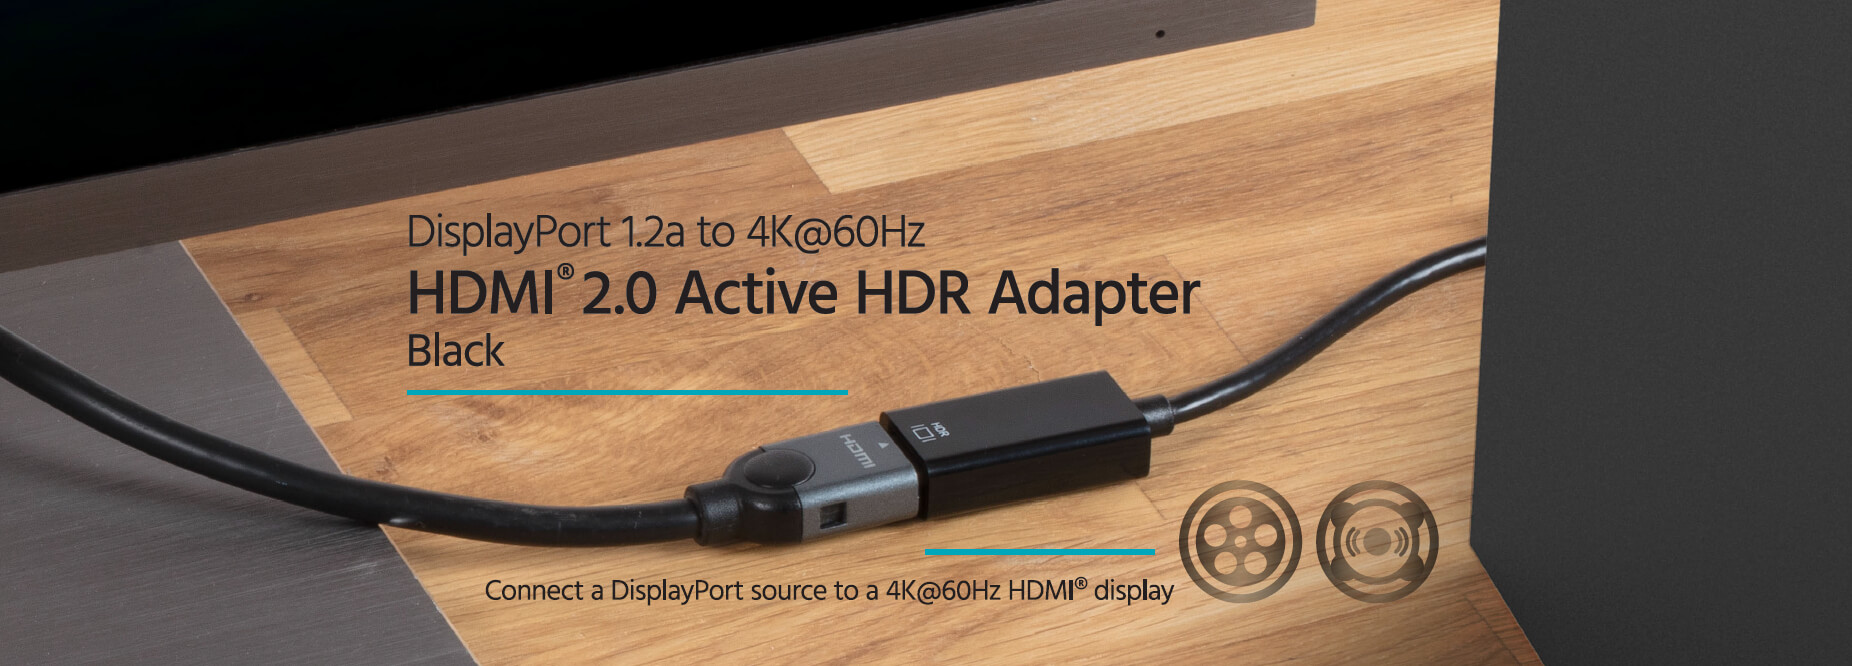 Monoprice Displayport 1.2a To 4k Hdmi, Dual Link Dvi, And Vga